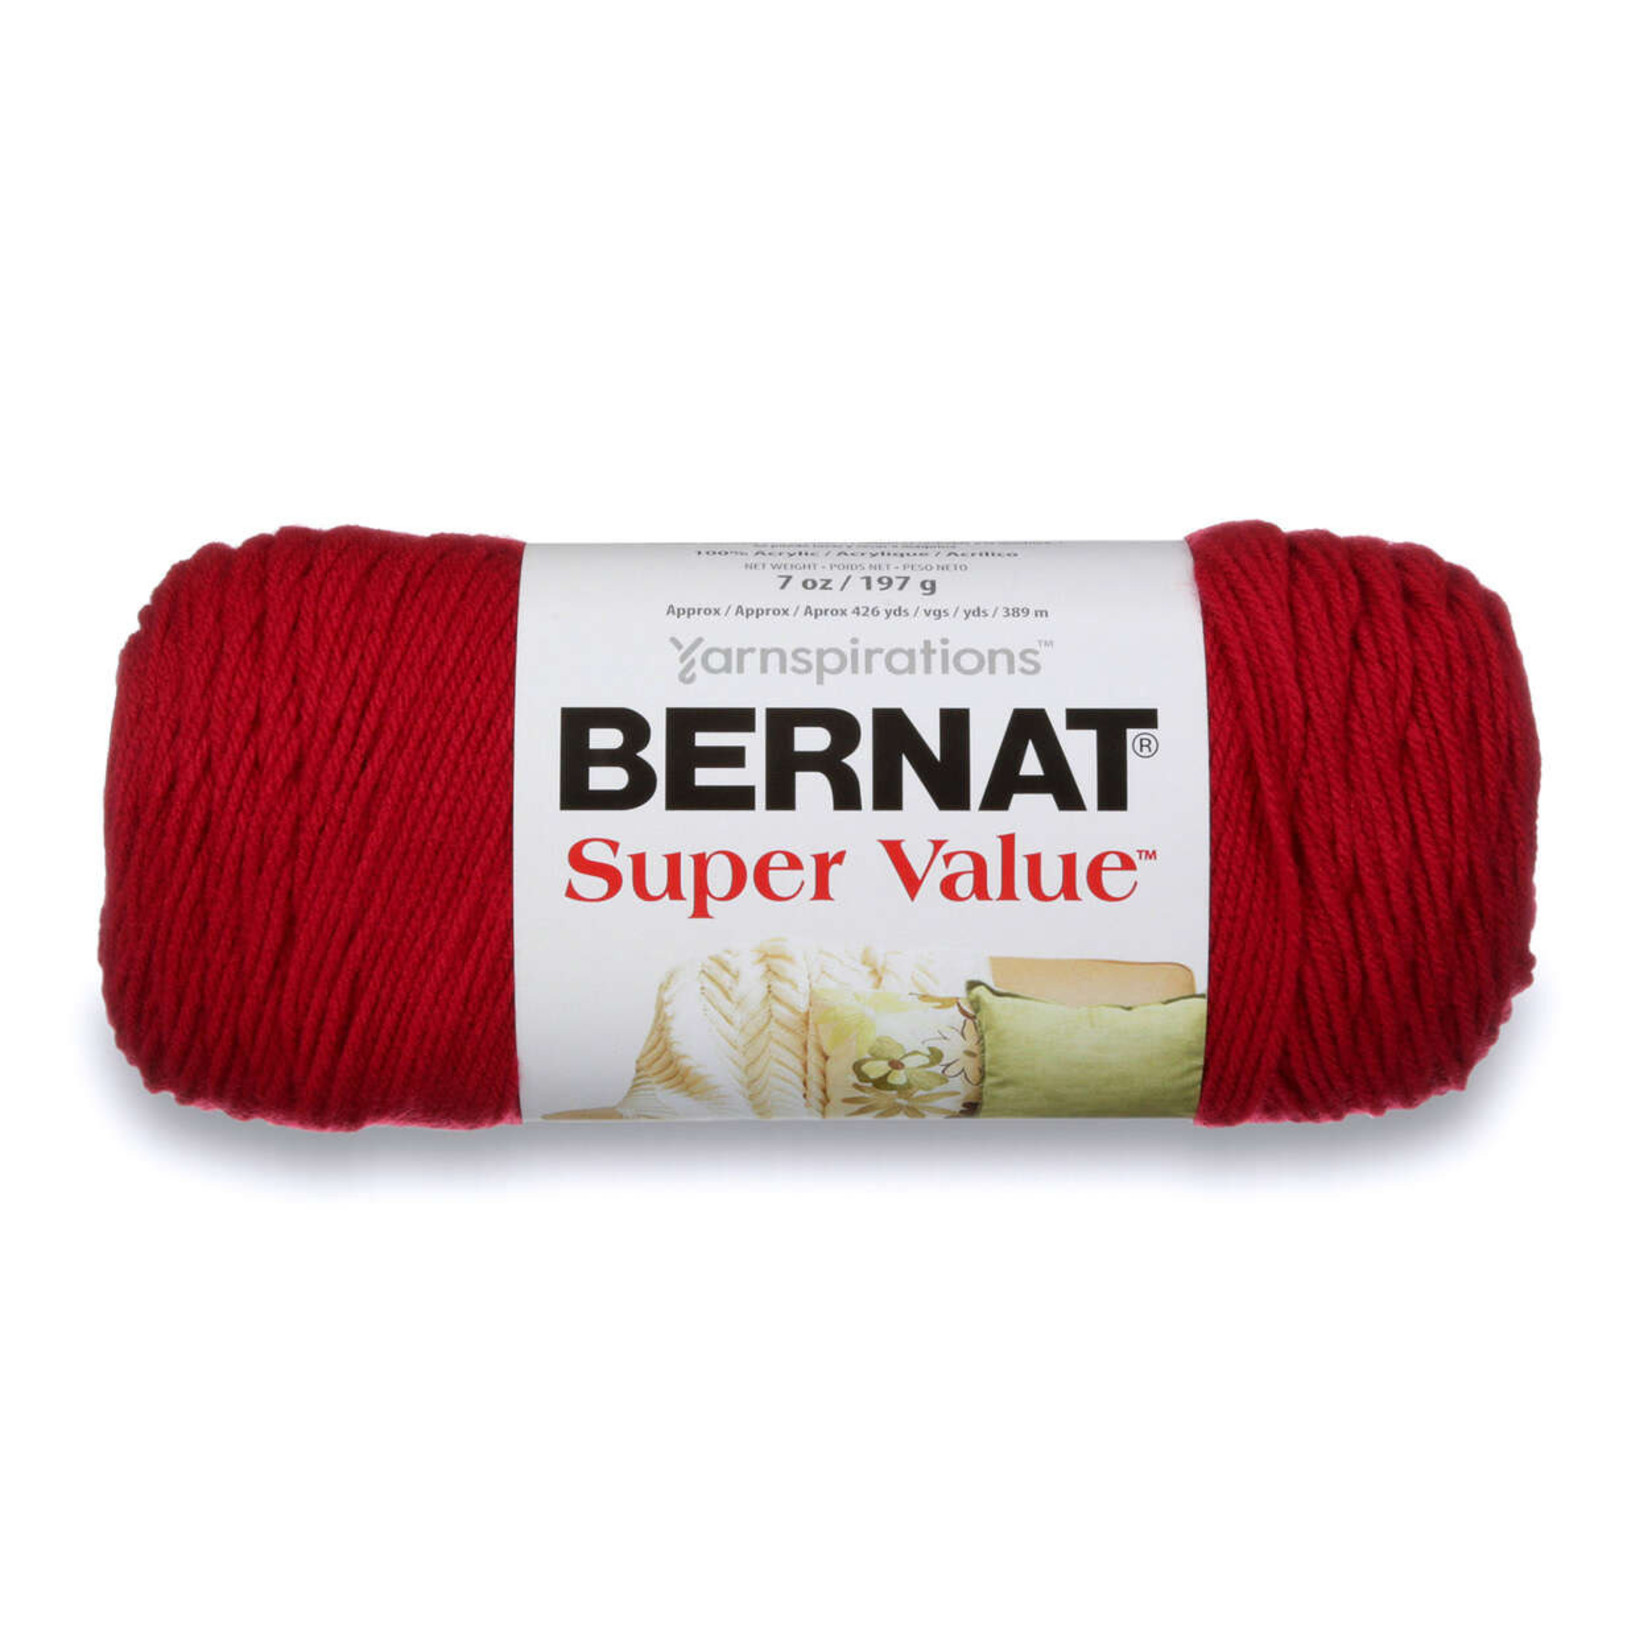 Bernat Super Value - Cherry Red